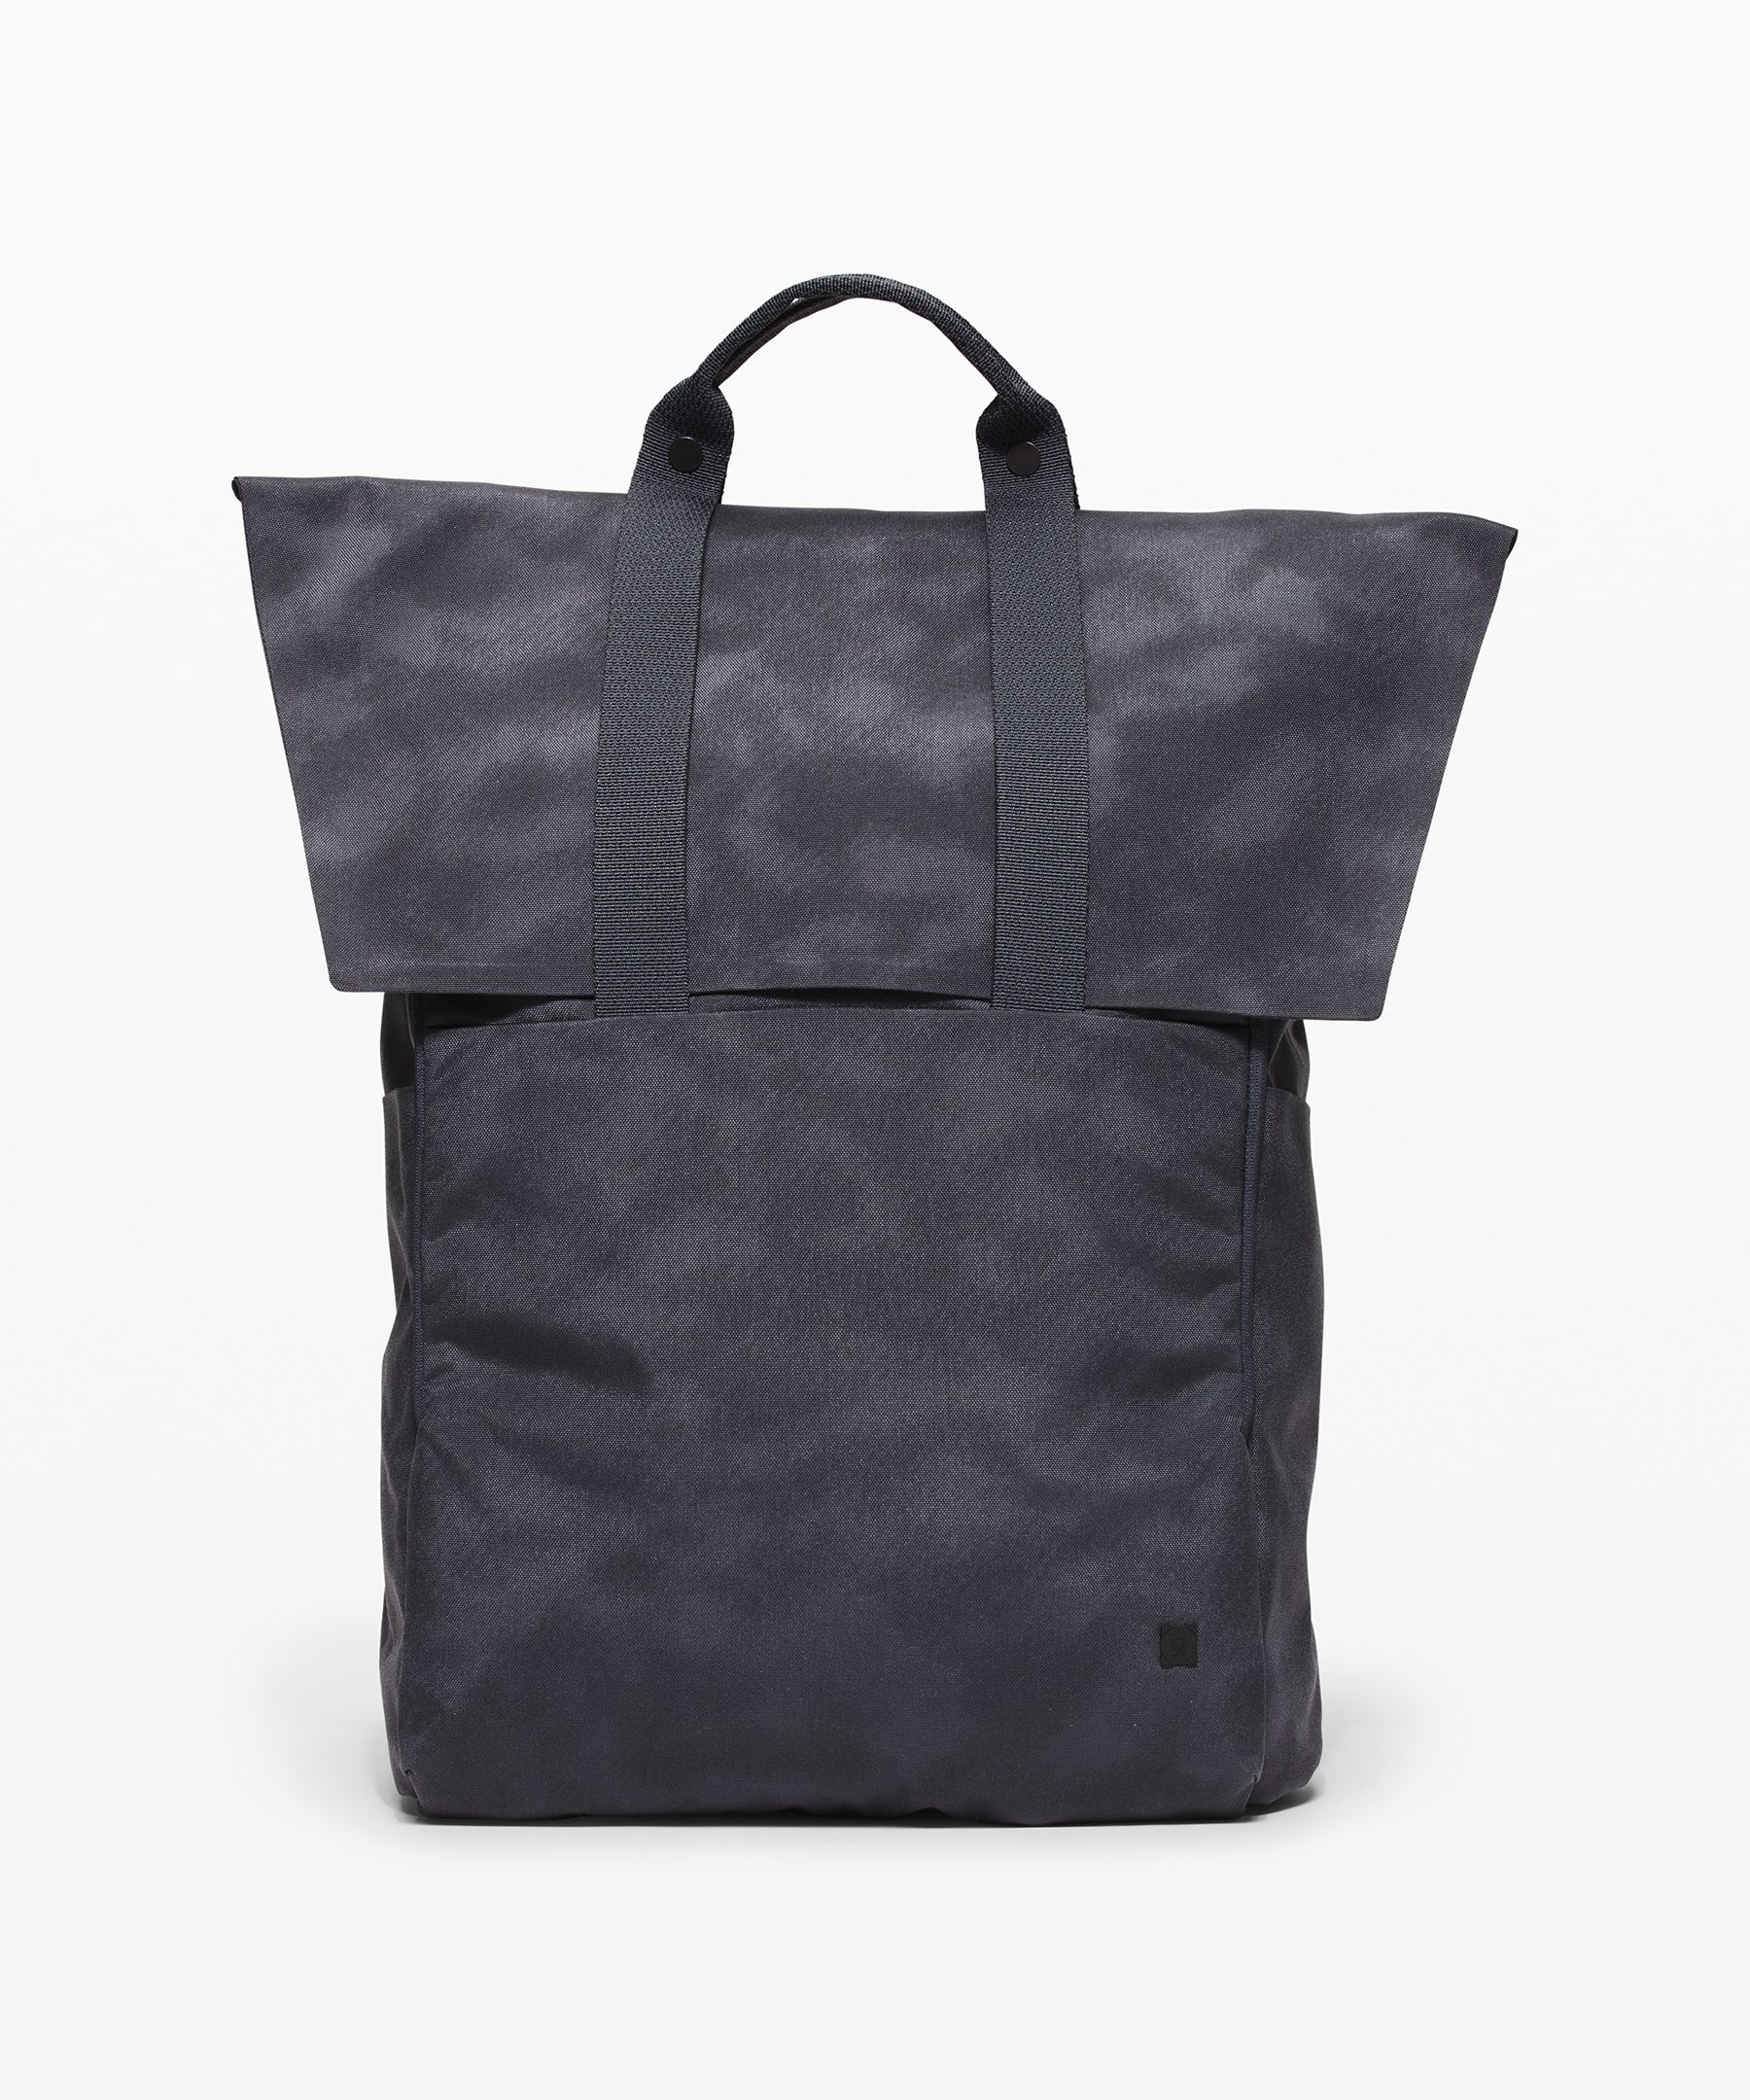 Early Embark Backpack | Men's Bags 